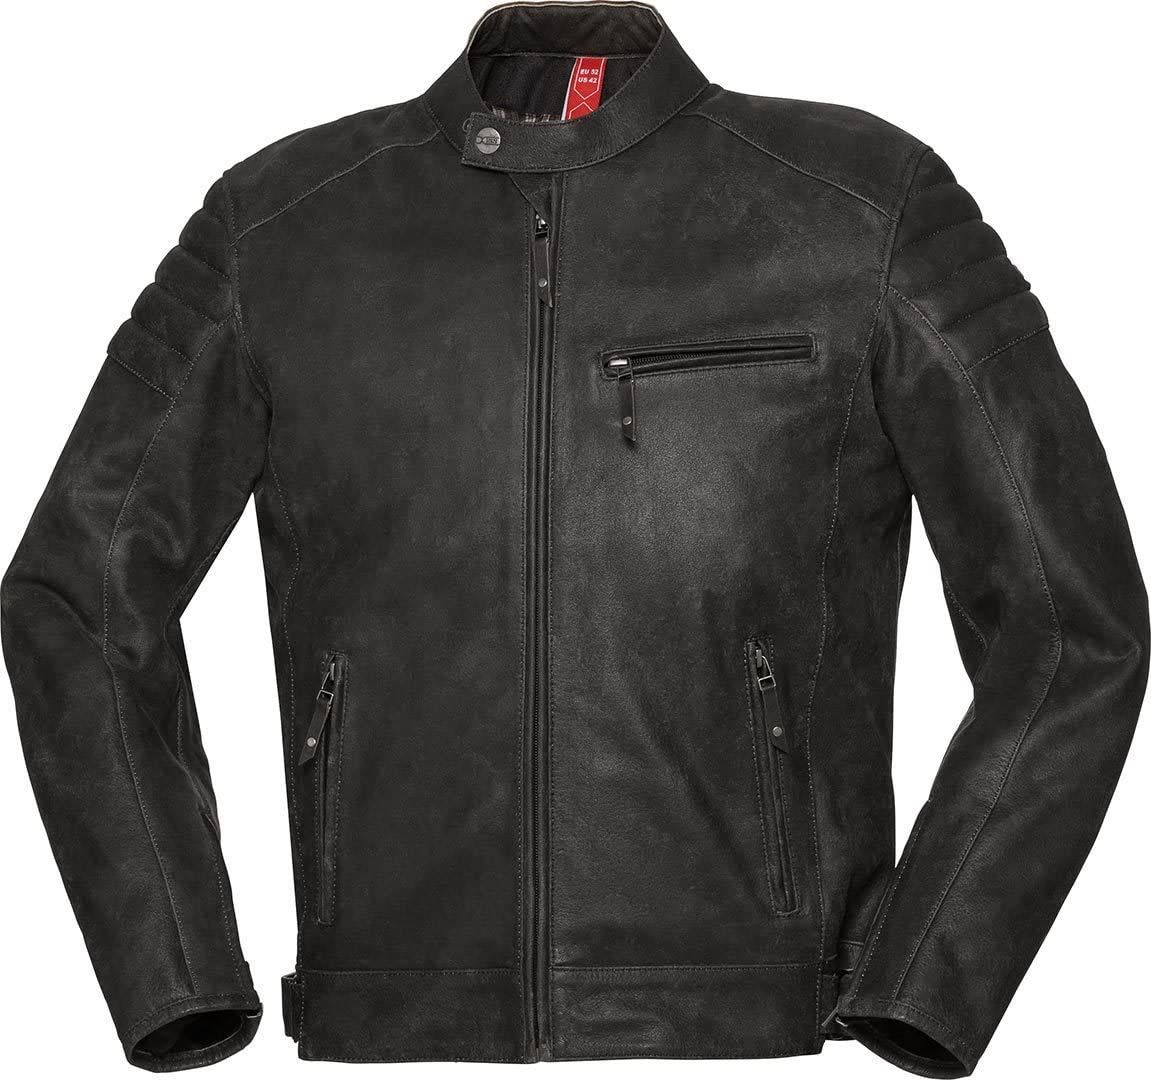 IXS X-Classic LD Cruiser leather motorcycle jacket